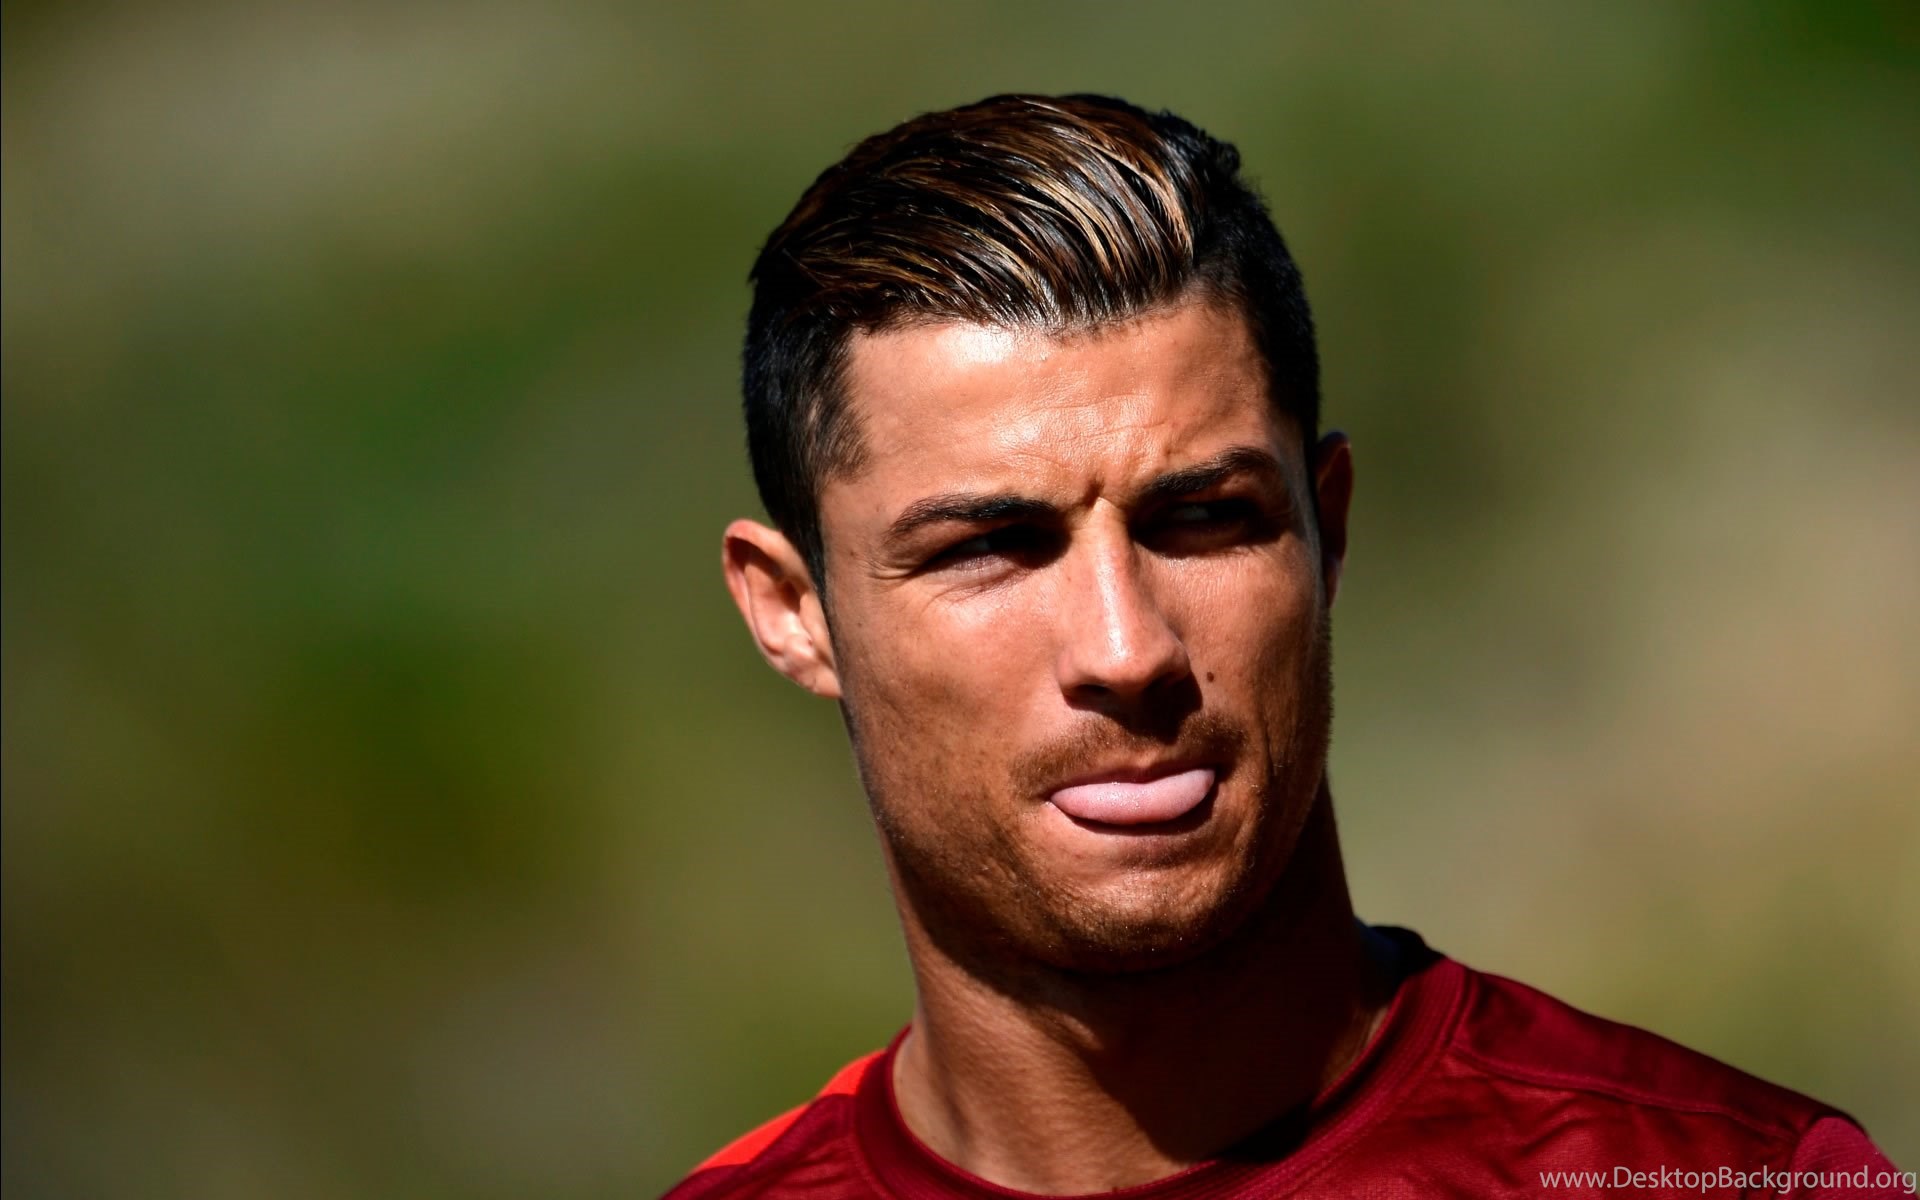 Cristiano Ronaldo Haircut  Mens Hairstyles Today